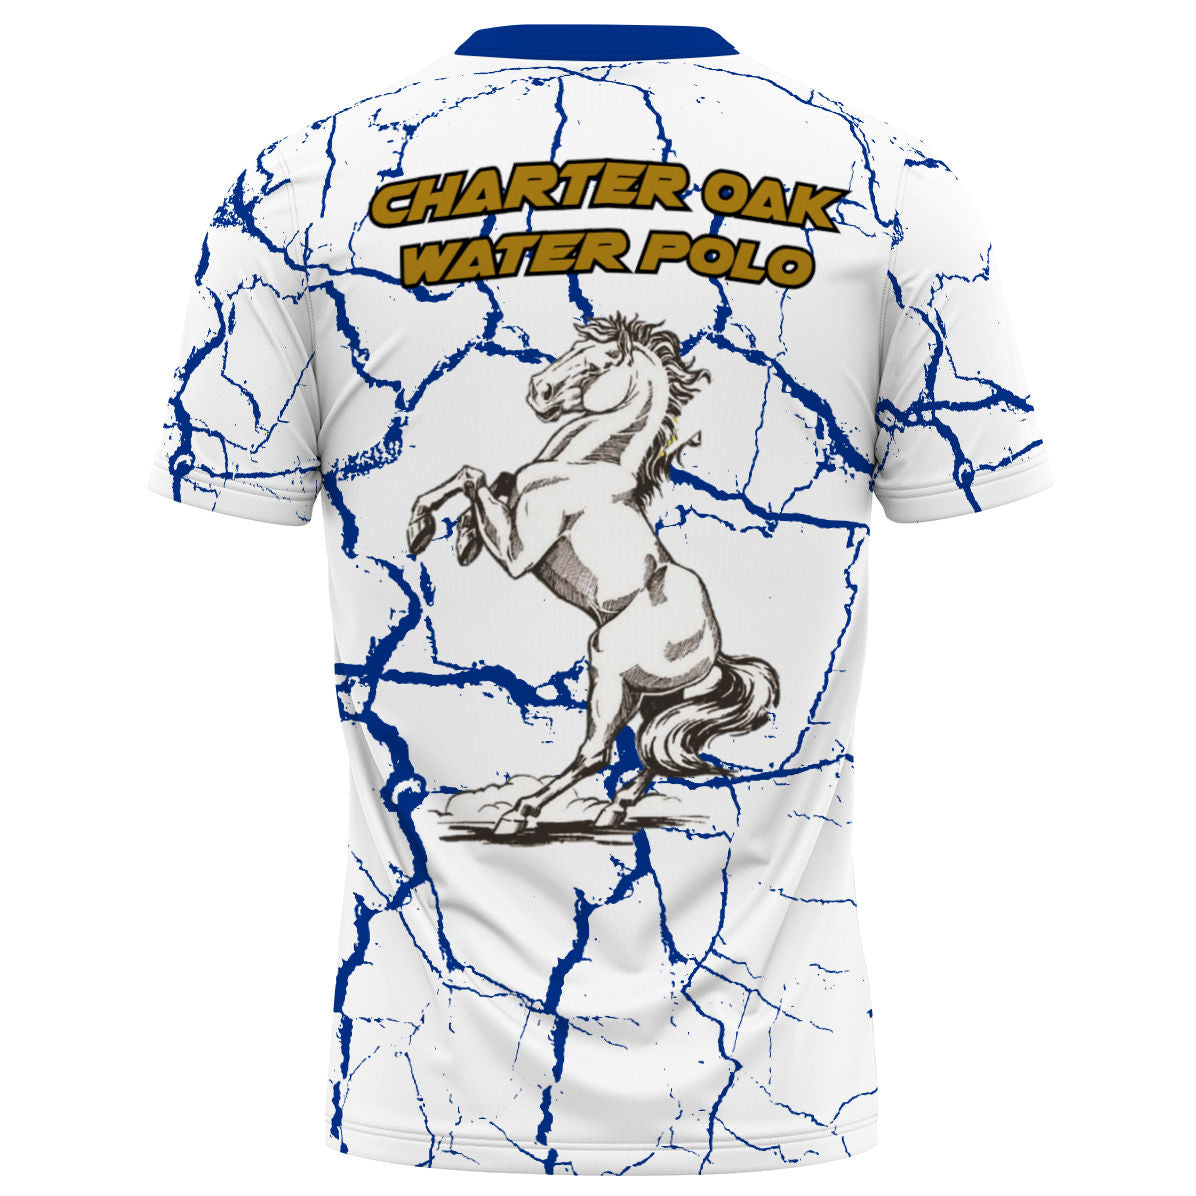 Charter Oak Waterpolo - Men's Performance Shirt